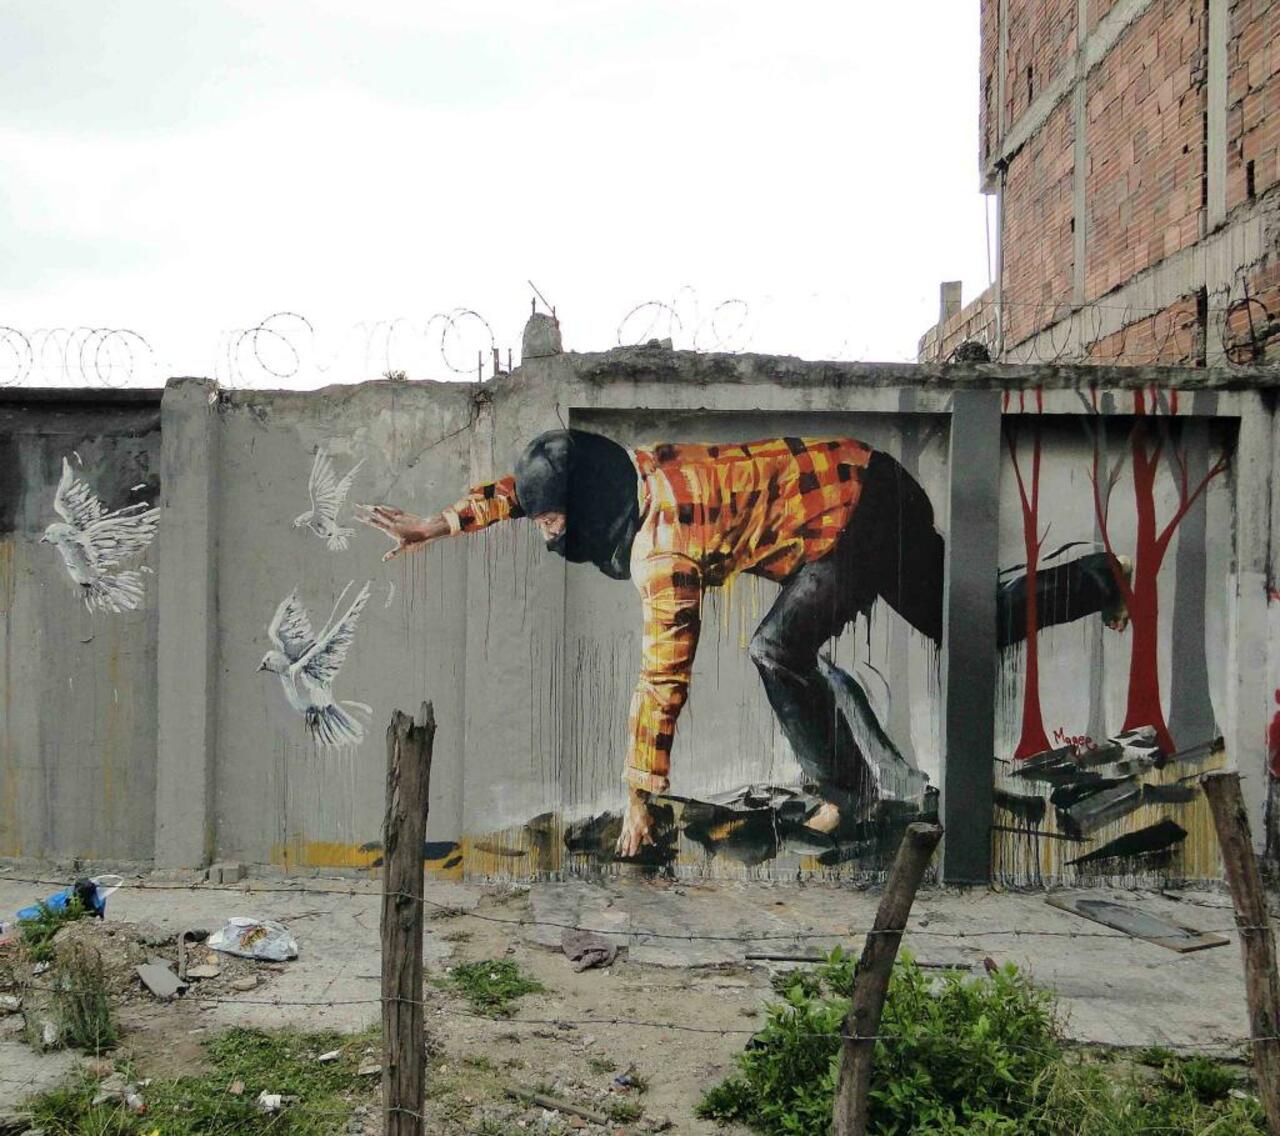 FINTAN MAGEE

#streetart #paint #art #photo #urban #banksy #graffiti #world #painting http://t.co/eECOX8tT87